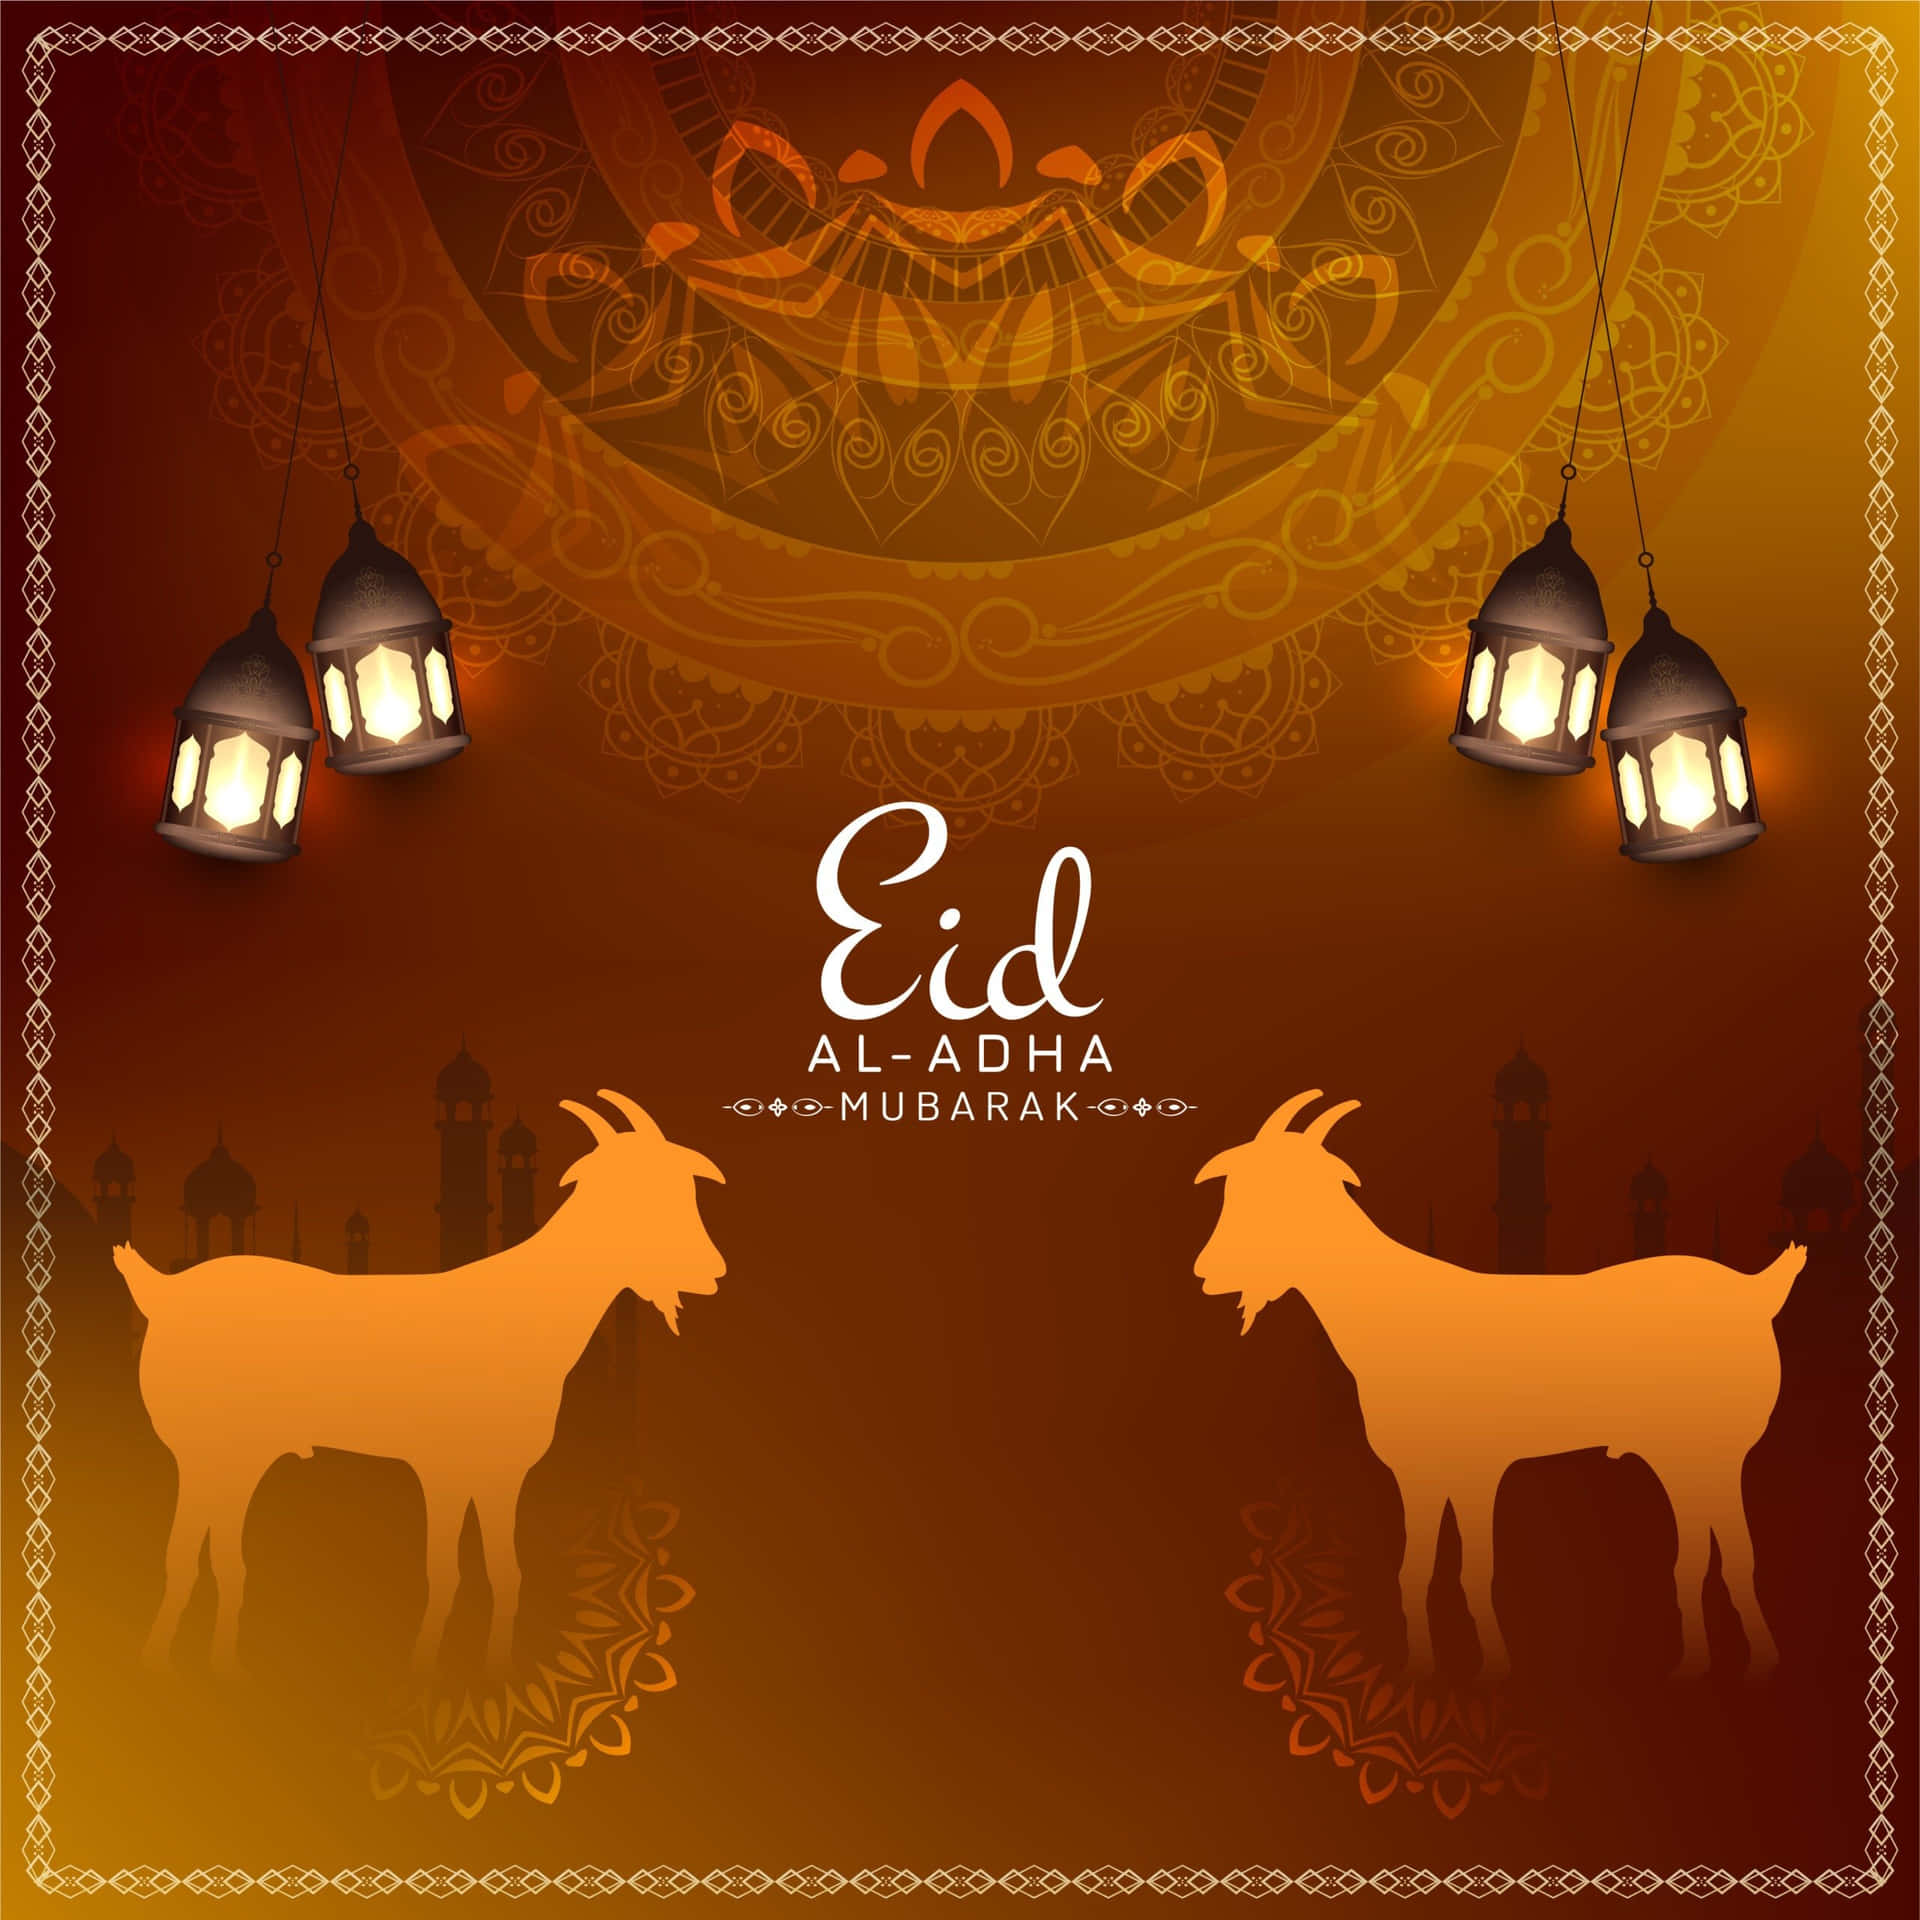 "celebrating Traditions: Eid Mubarak"